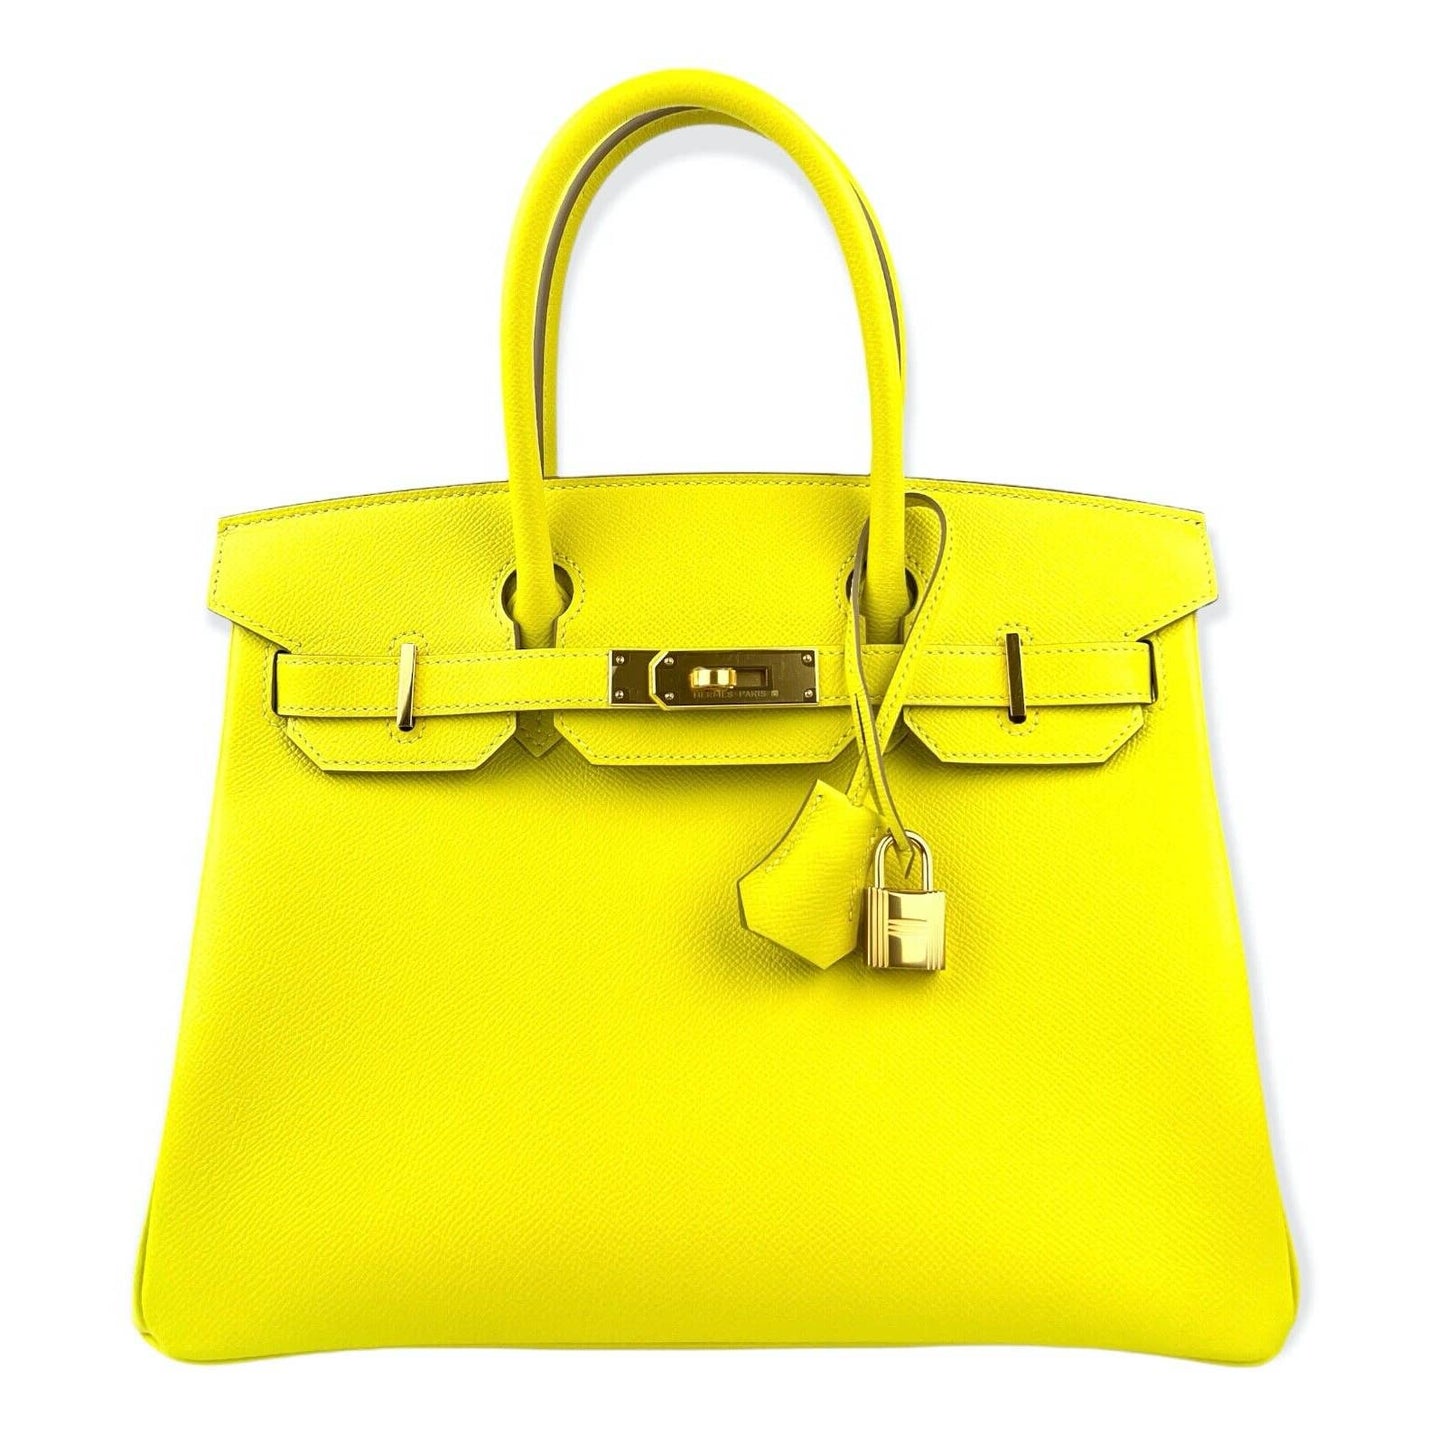 Hermes Birkin 30 Lime Yellow Epsom Leather Gold Hardware Bag Handbag